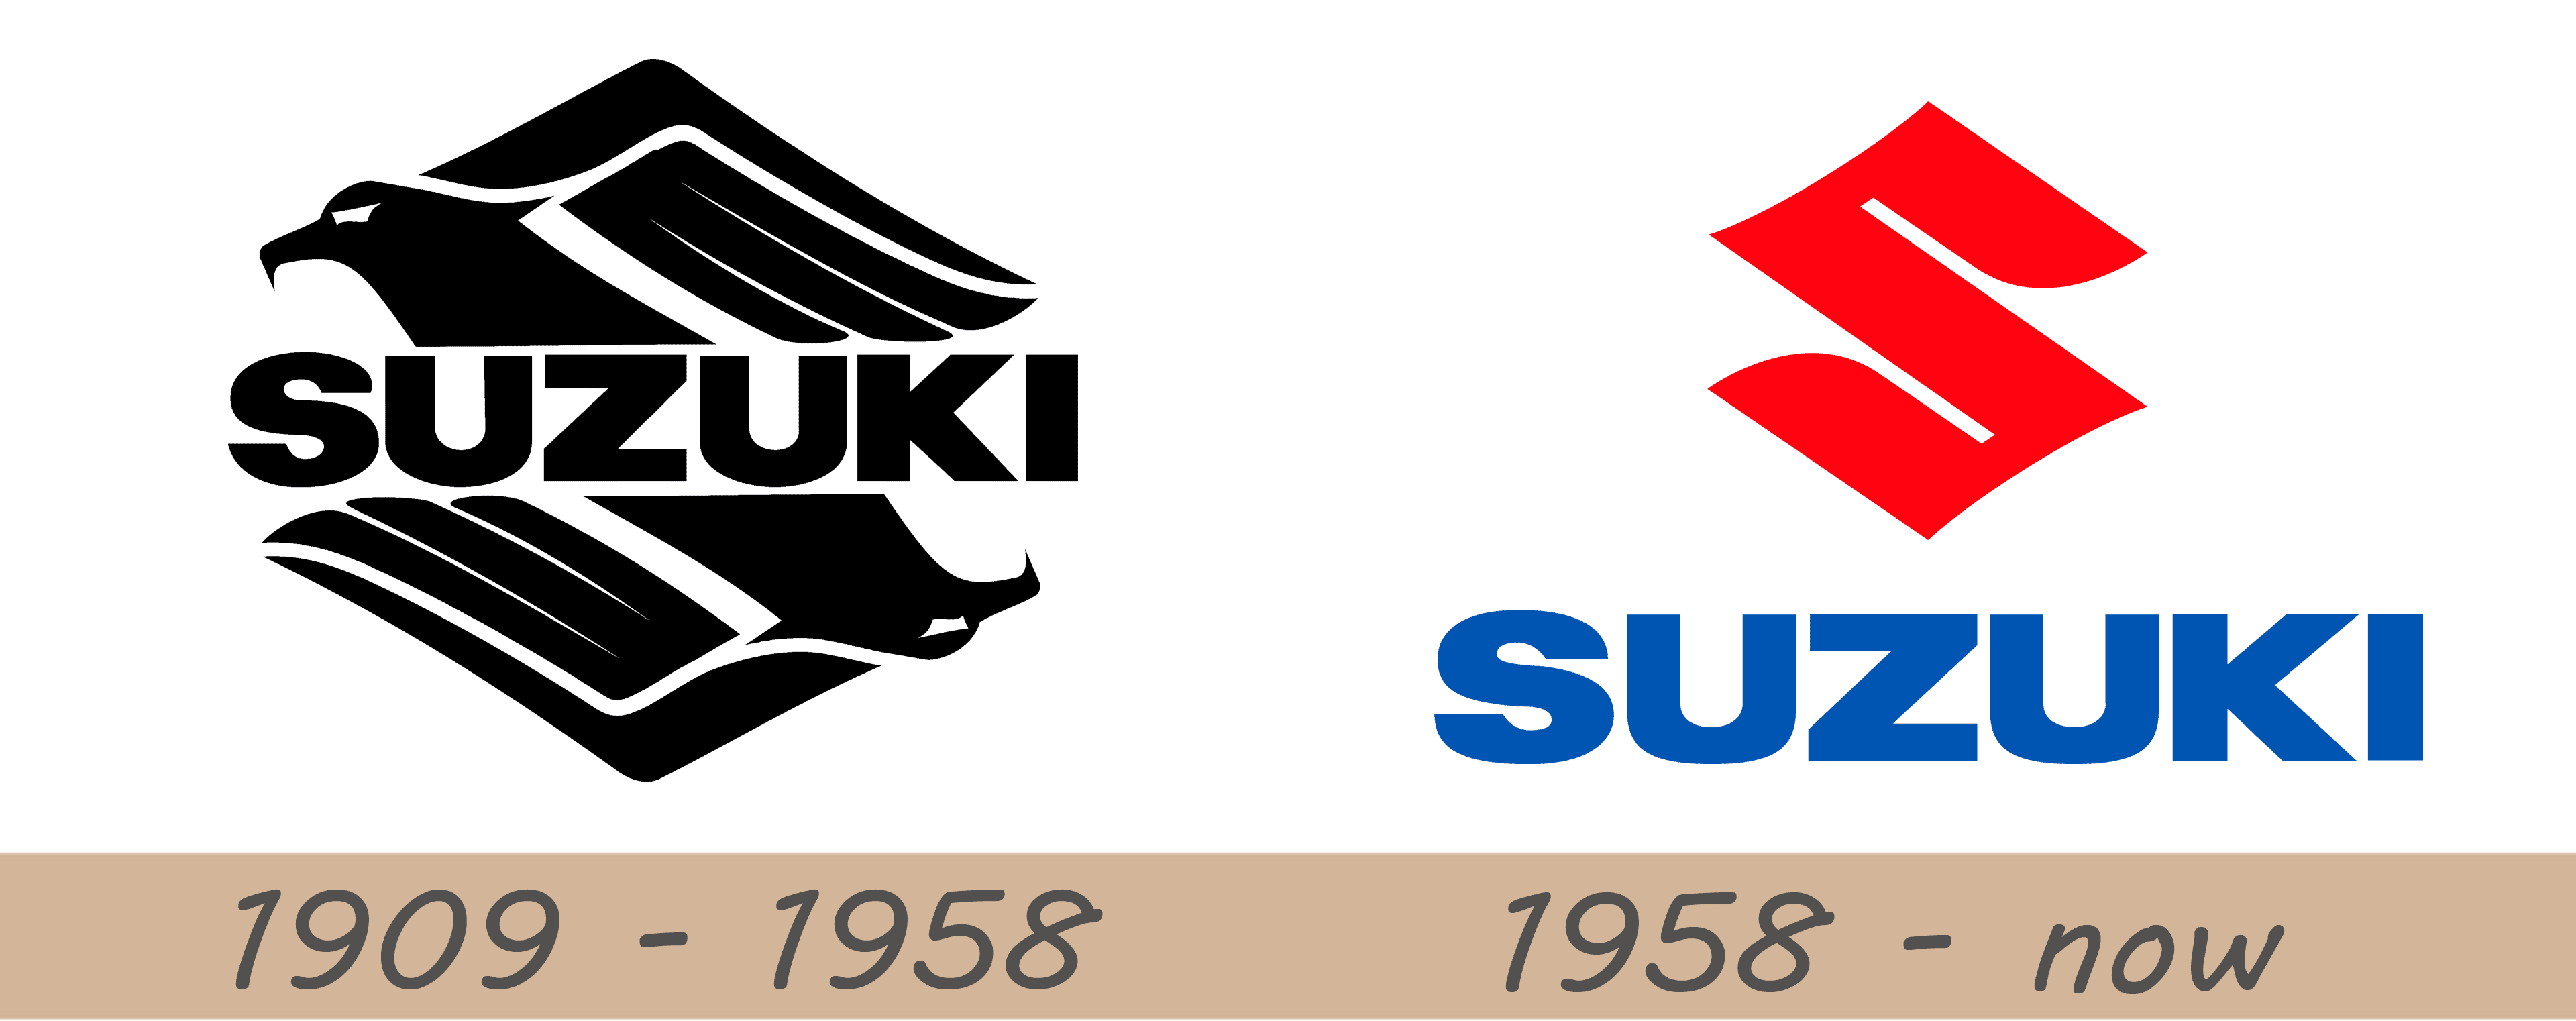 Suzuki Logo Wallpapers - Wallpaper Cave